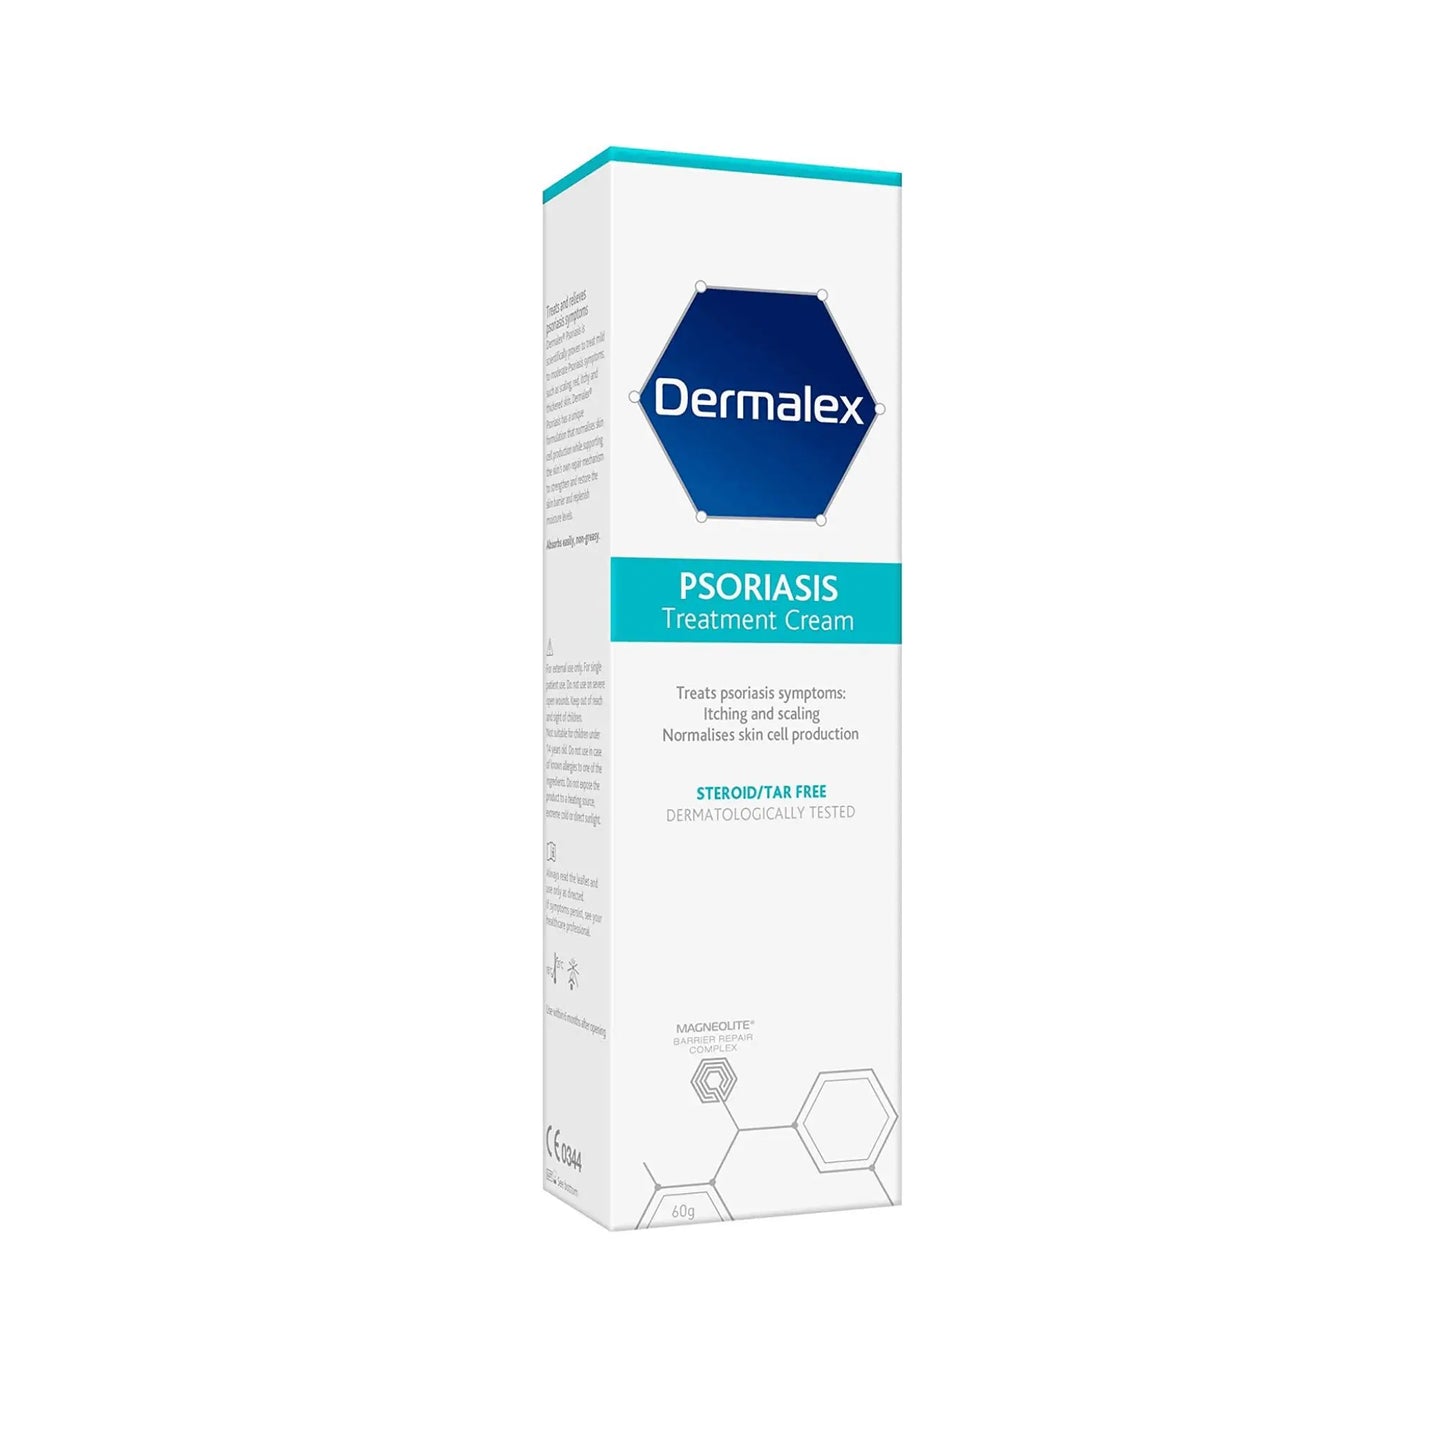 Dermalex Psoriasis Treatment Cream Clinically Proven 60g